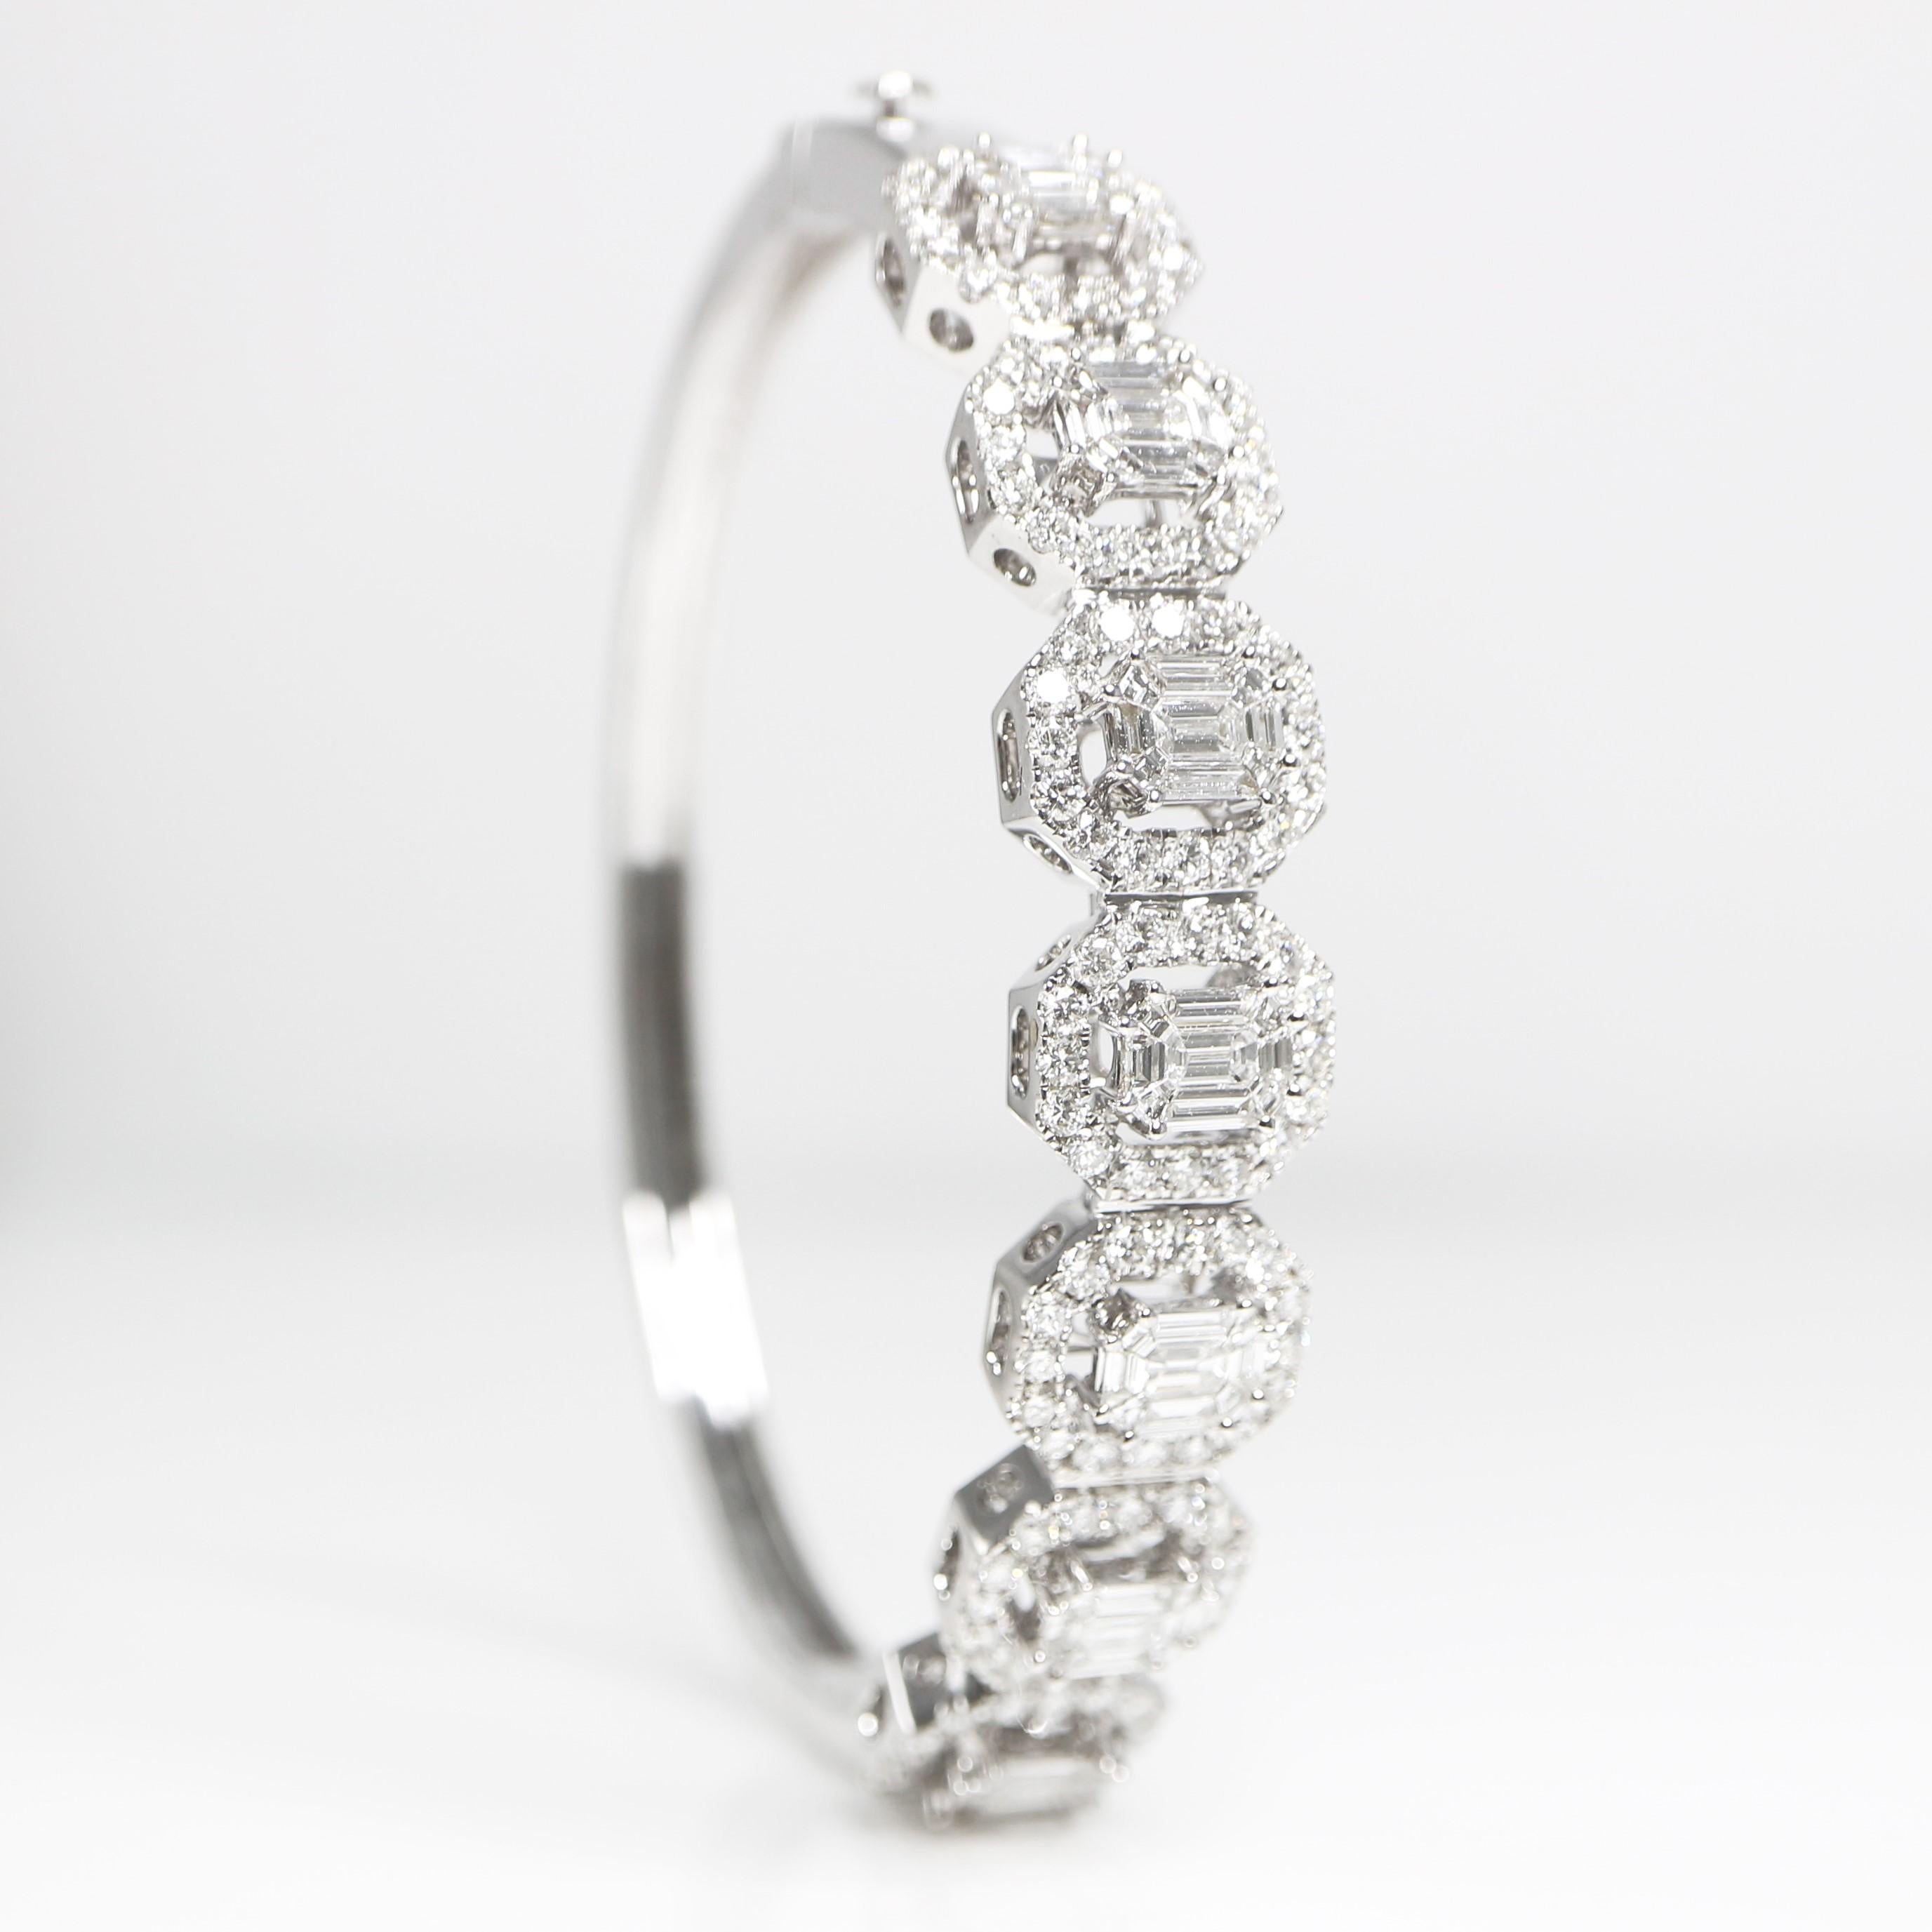 IGI 14k 3.92 Carat Diamond Antique Art Deco Bangle Bracelet In New Condition For Sale In Kaohsiung City, TW